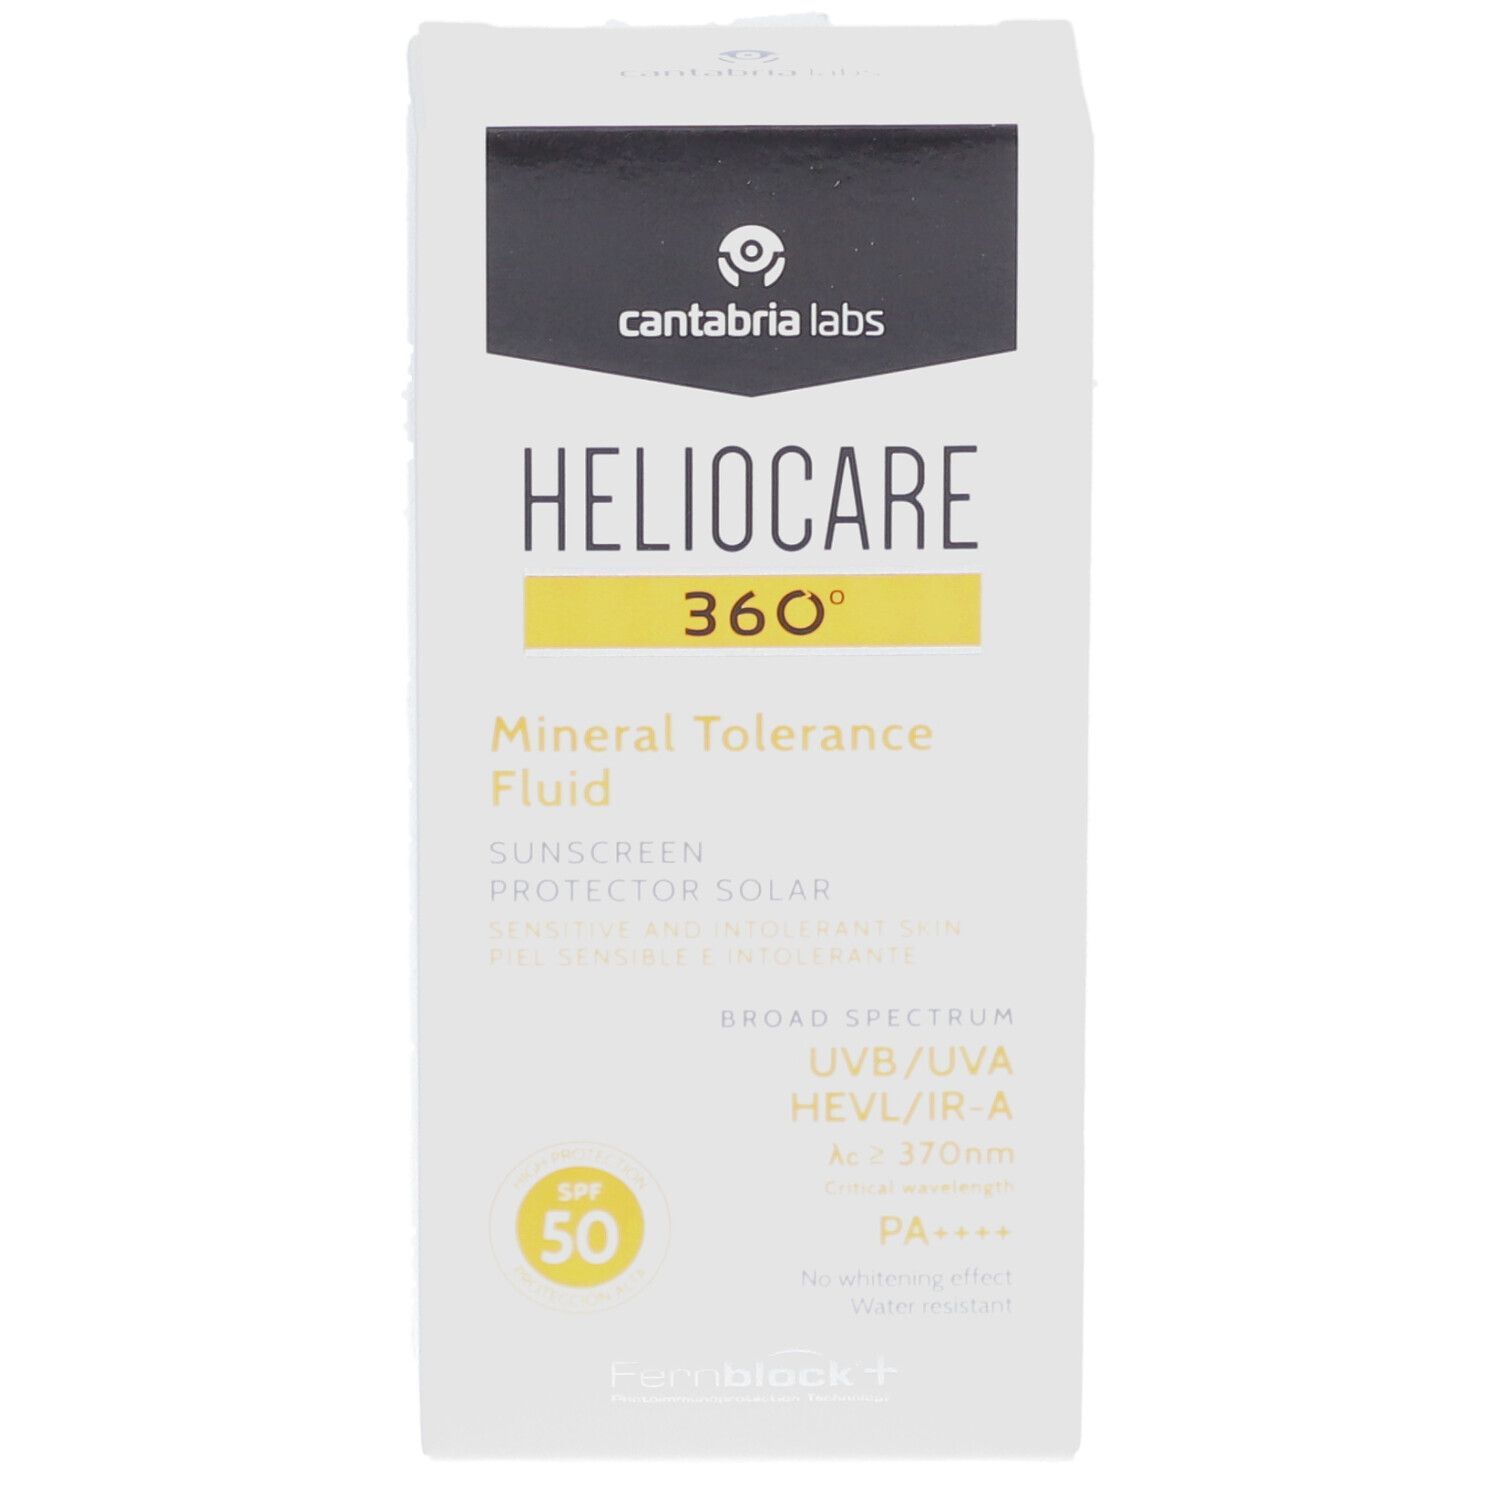 HELIOCARE® 360 Mineral Tolerance Fluid SPF 50